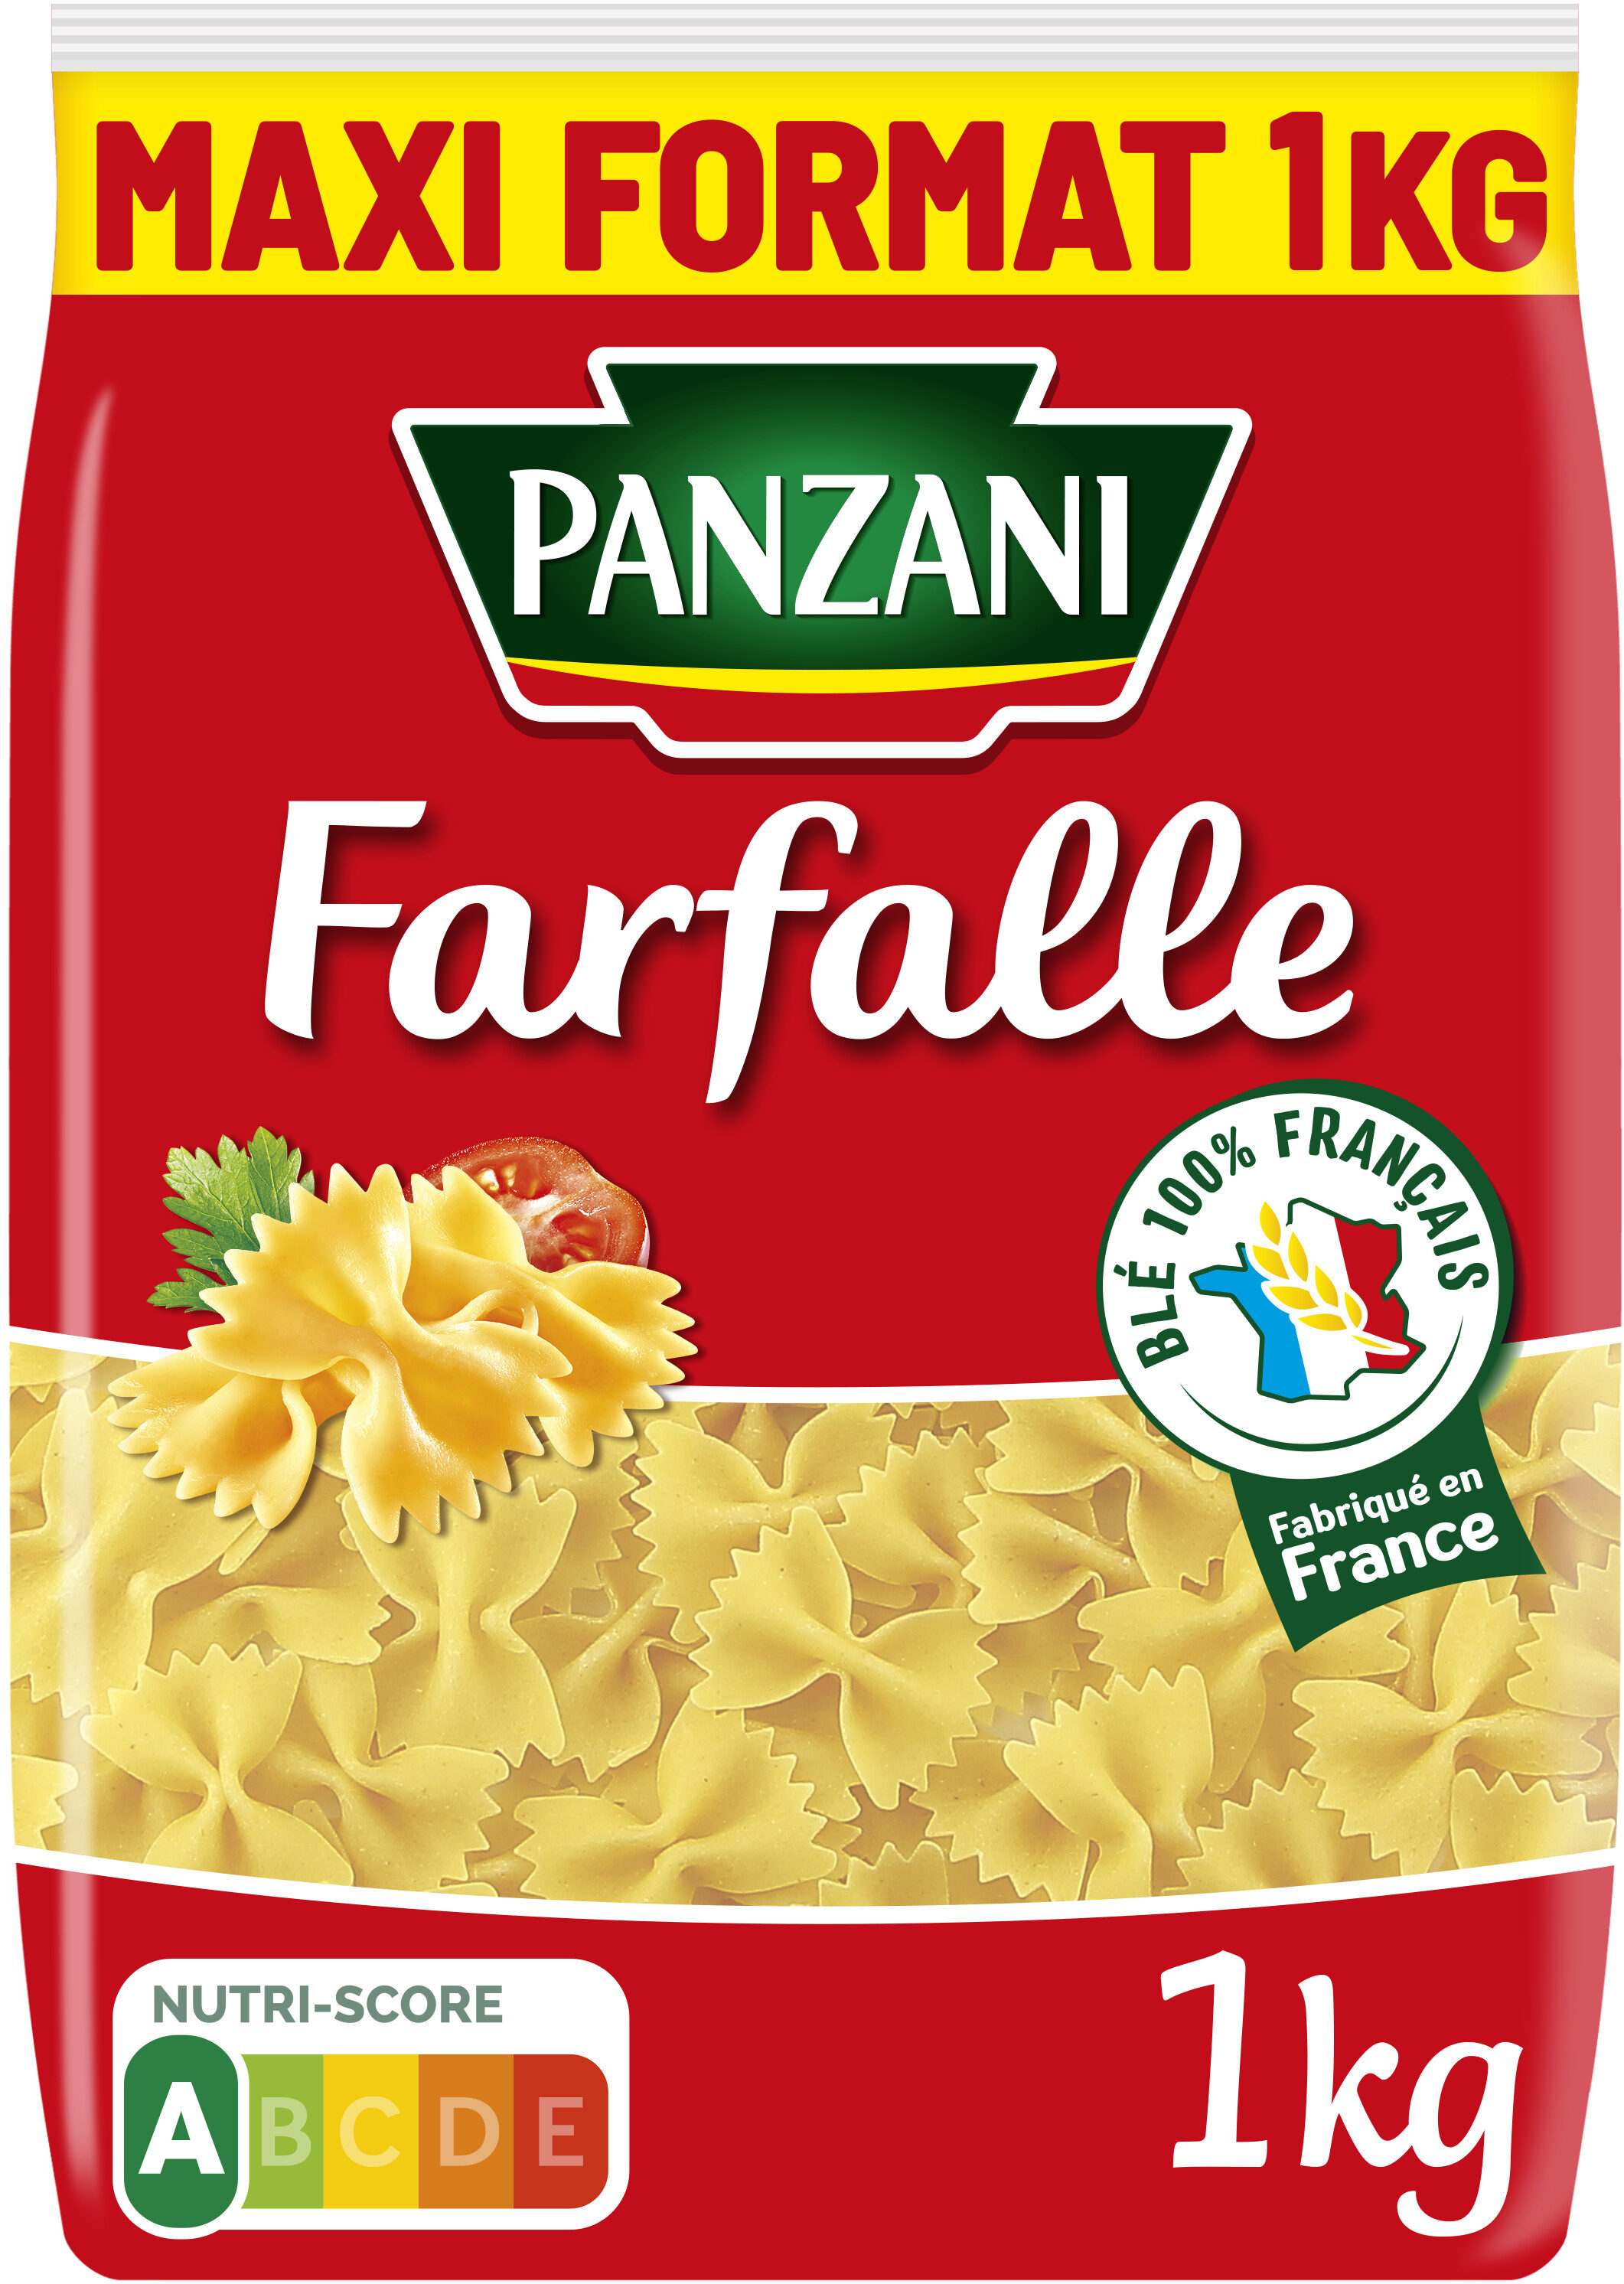 Farfalle - Product - fr